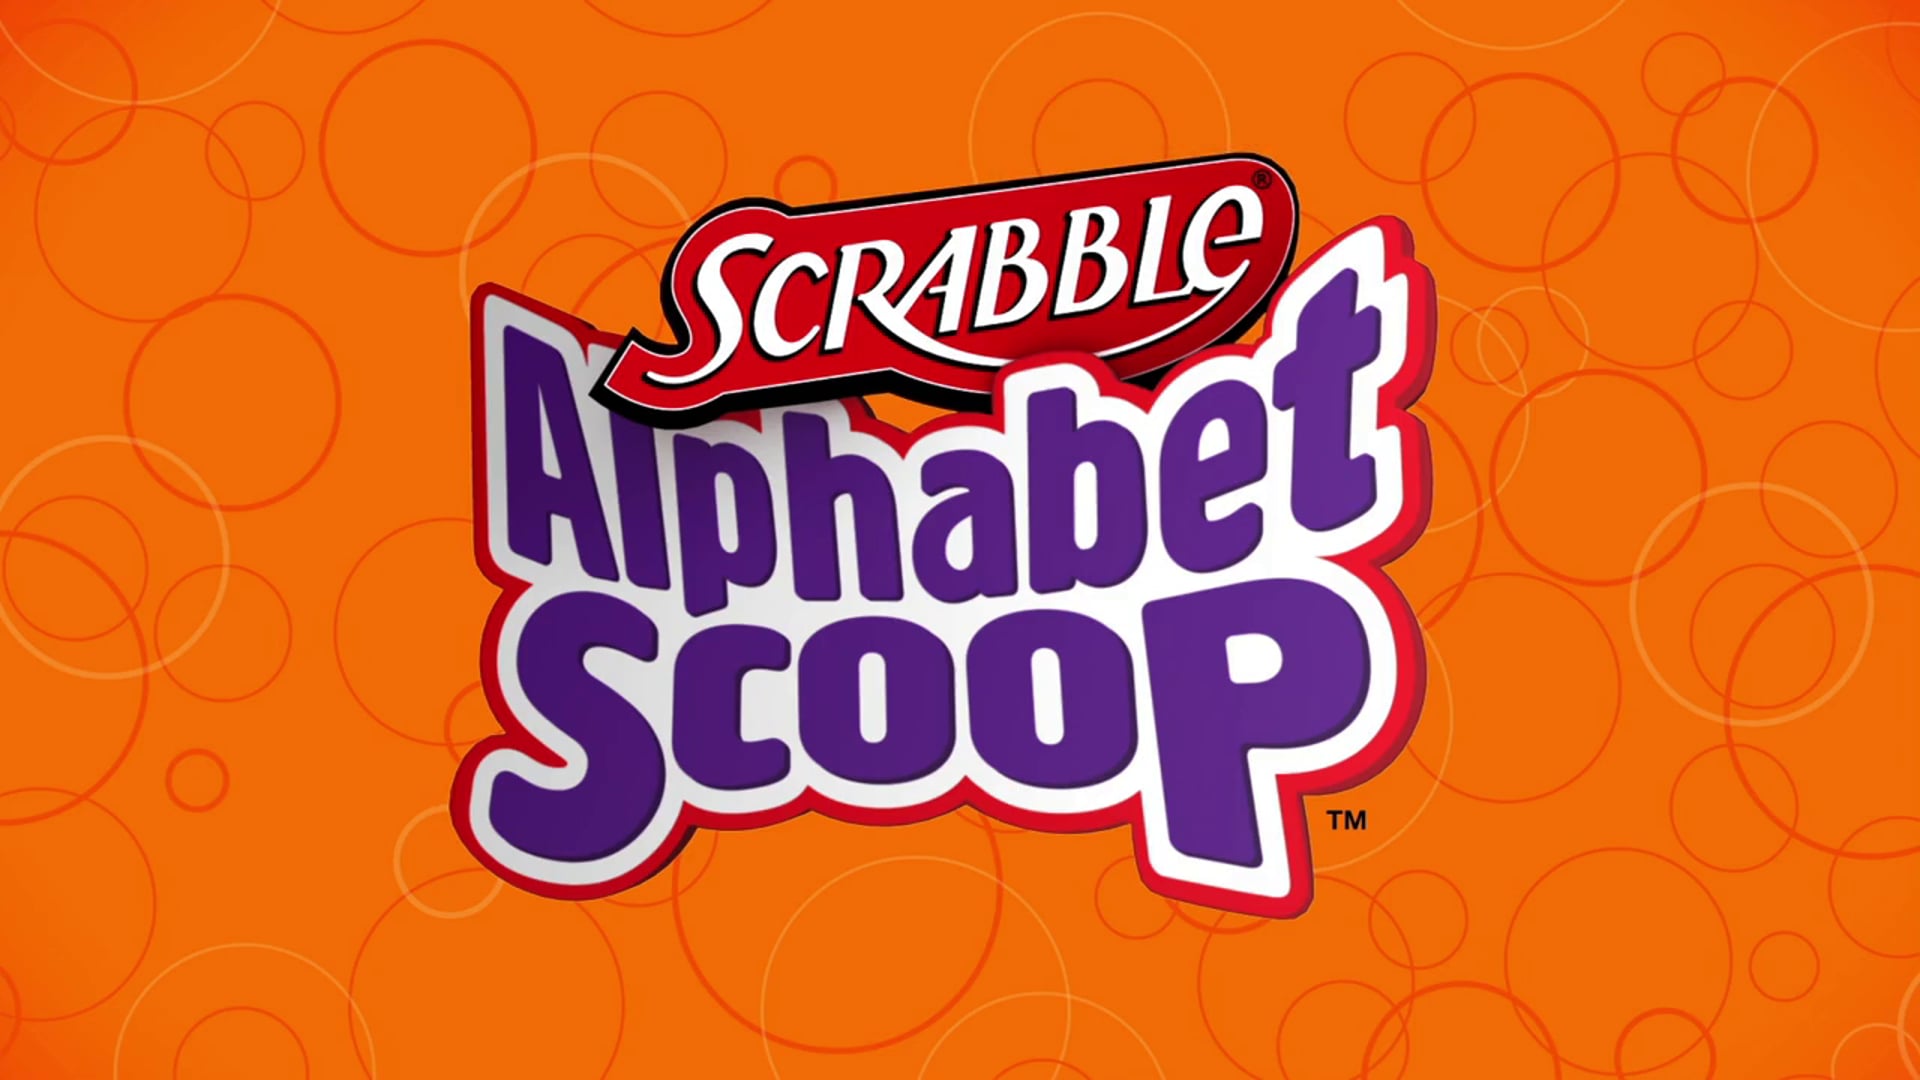 Scrabble Alphabet Scoops - Hasbro